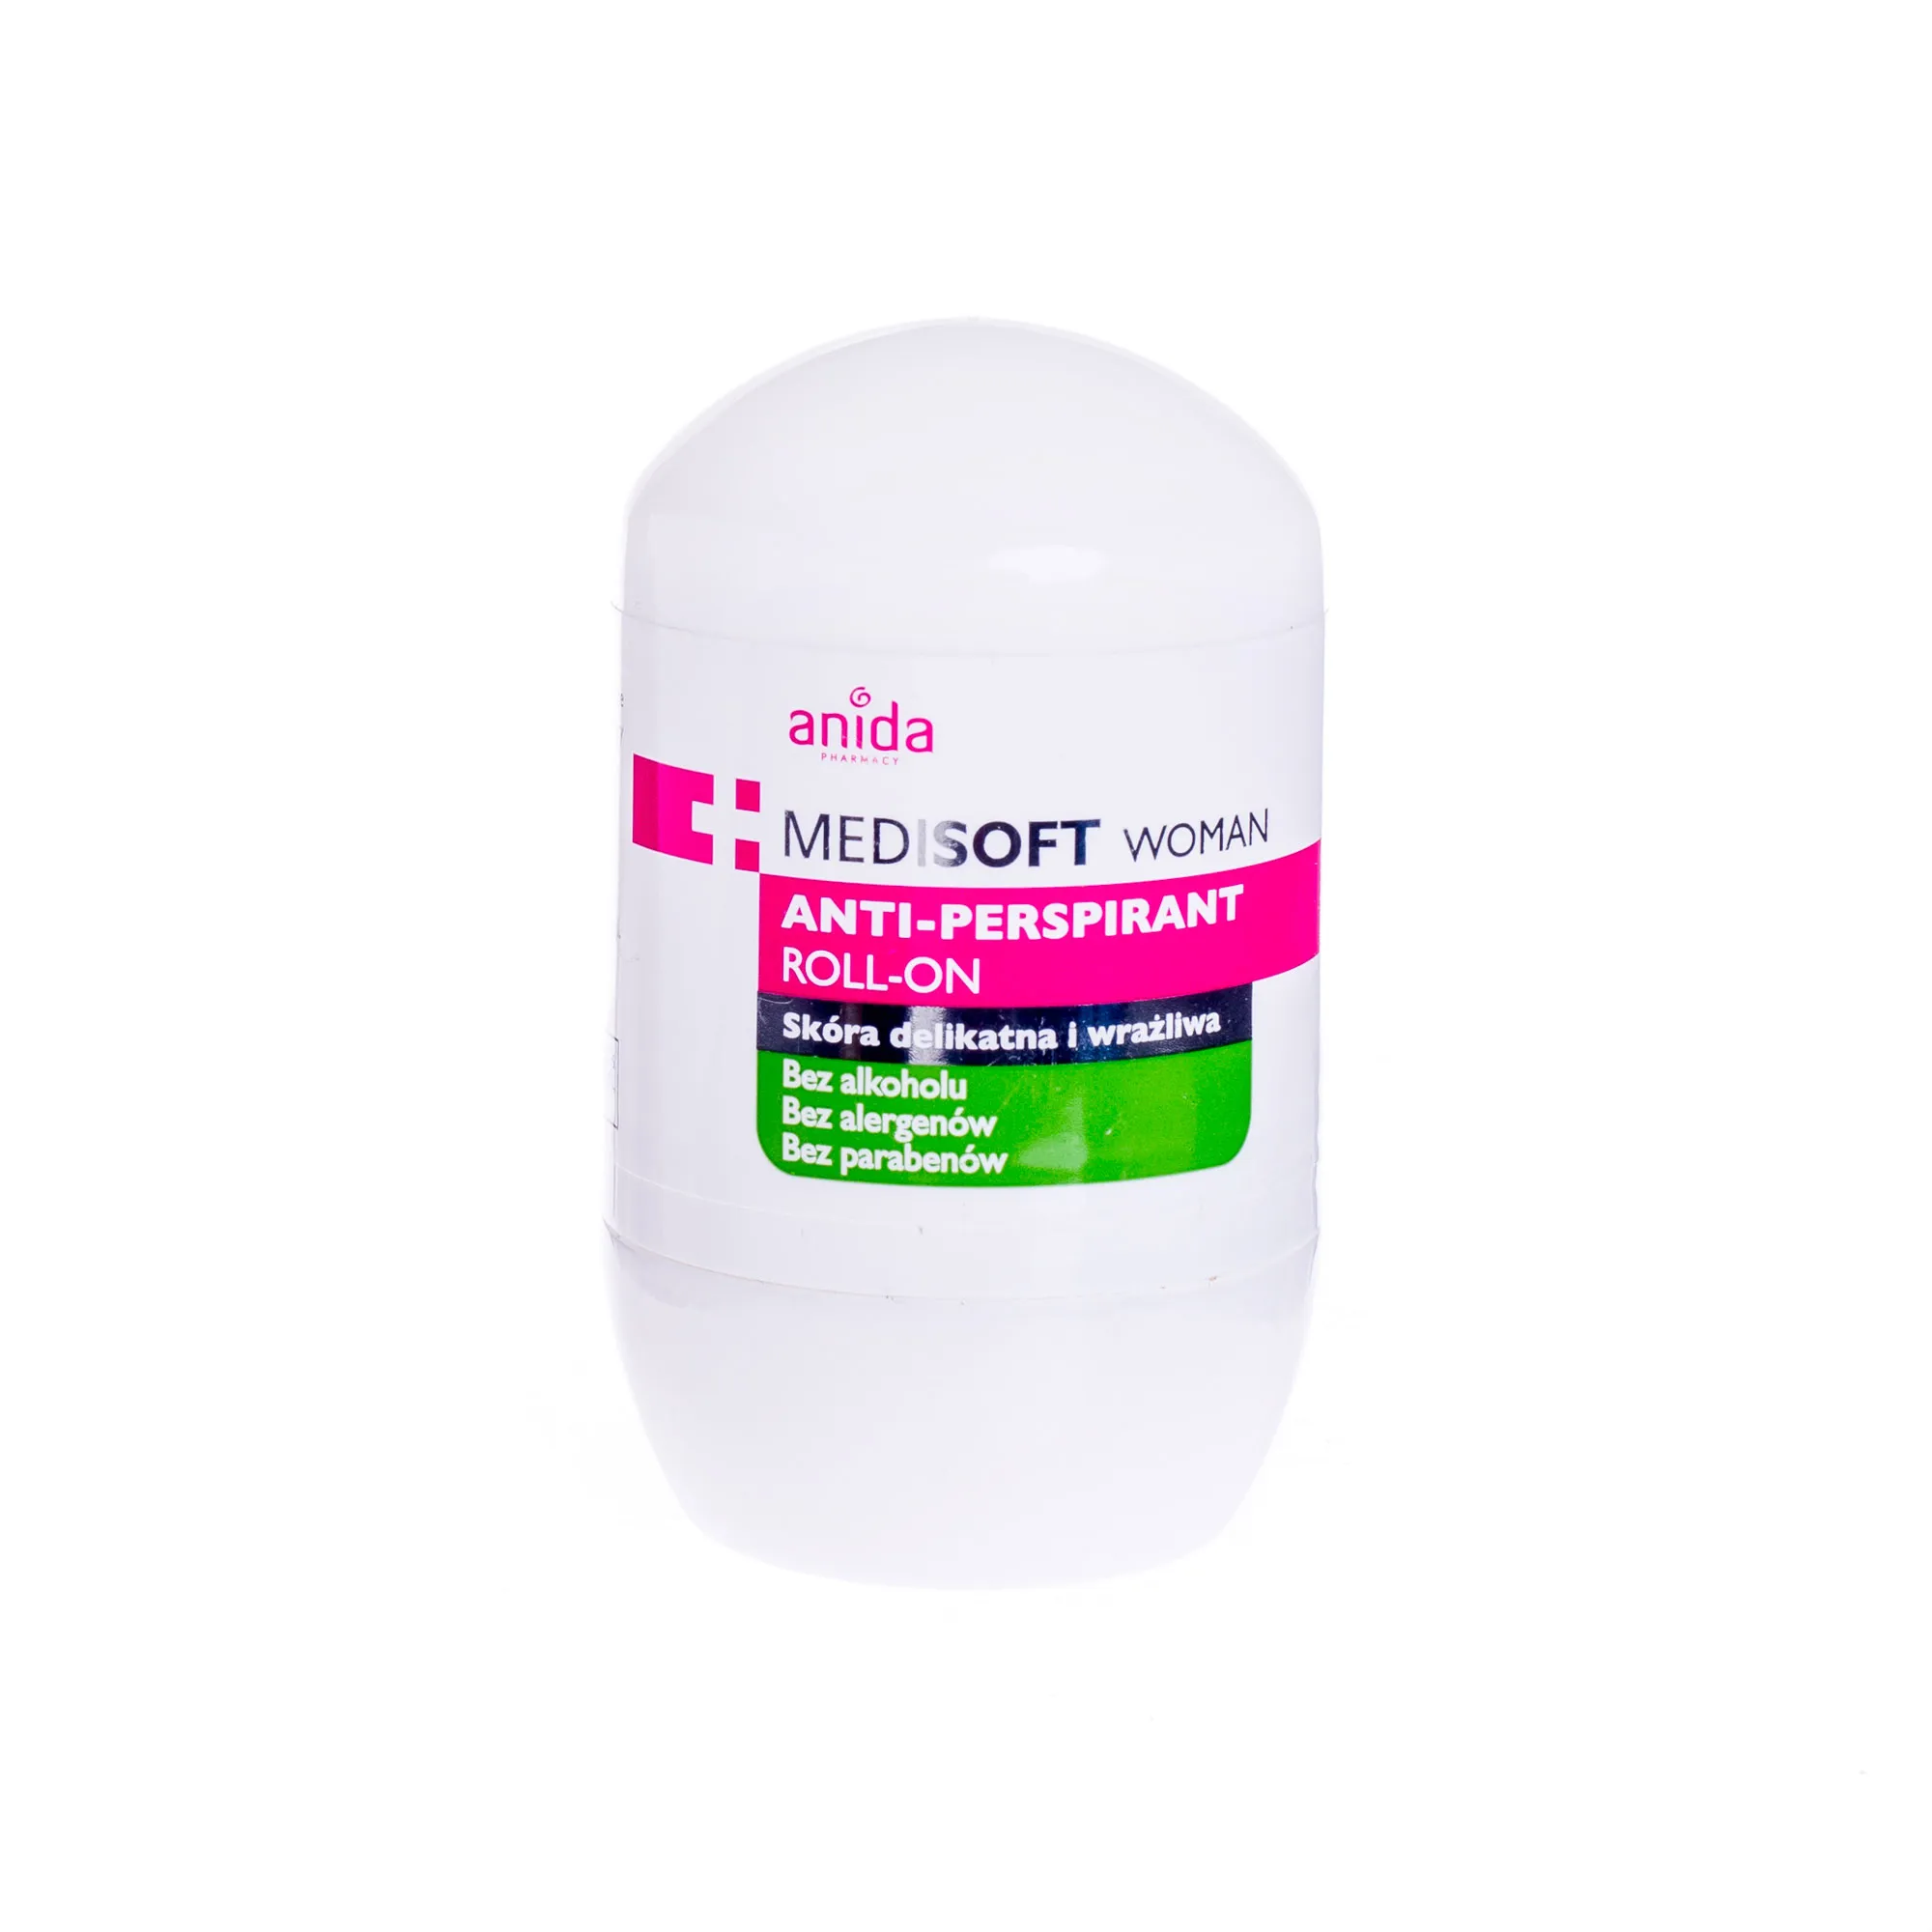 Anida Medi Soft Woman, antiperspirant, roll-on, 50 ml 